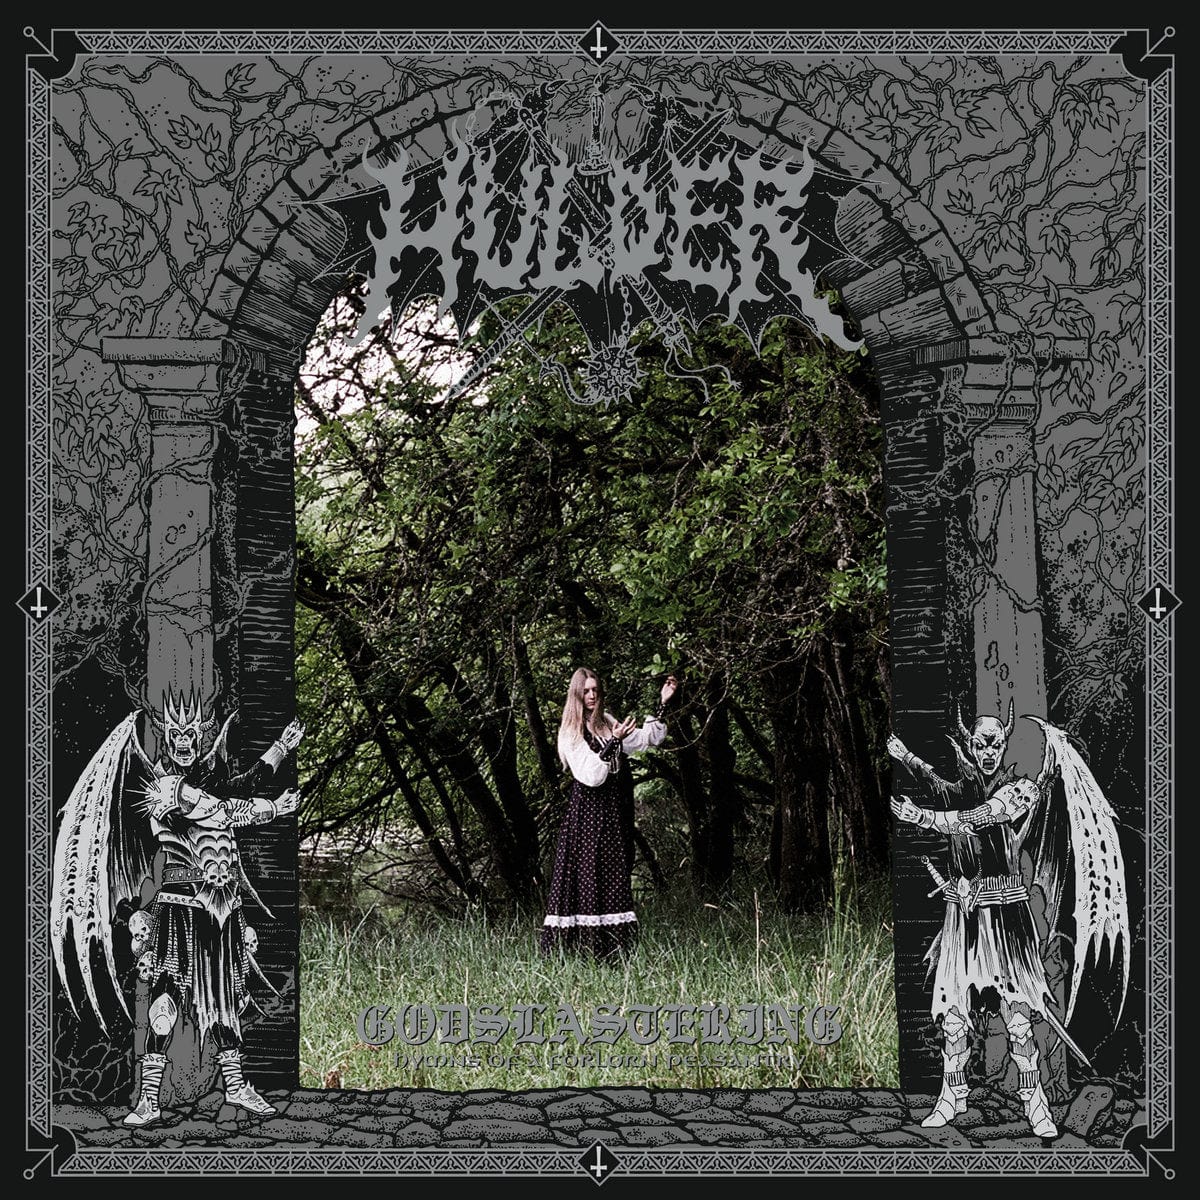 20 Buck Spin CD Hulder "Godslastering: Hymns Of A Forlorn Peasantry" CD